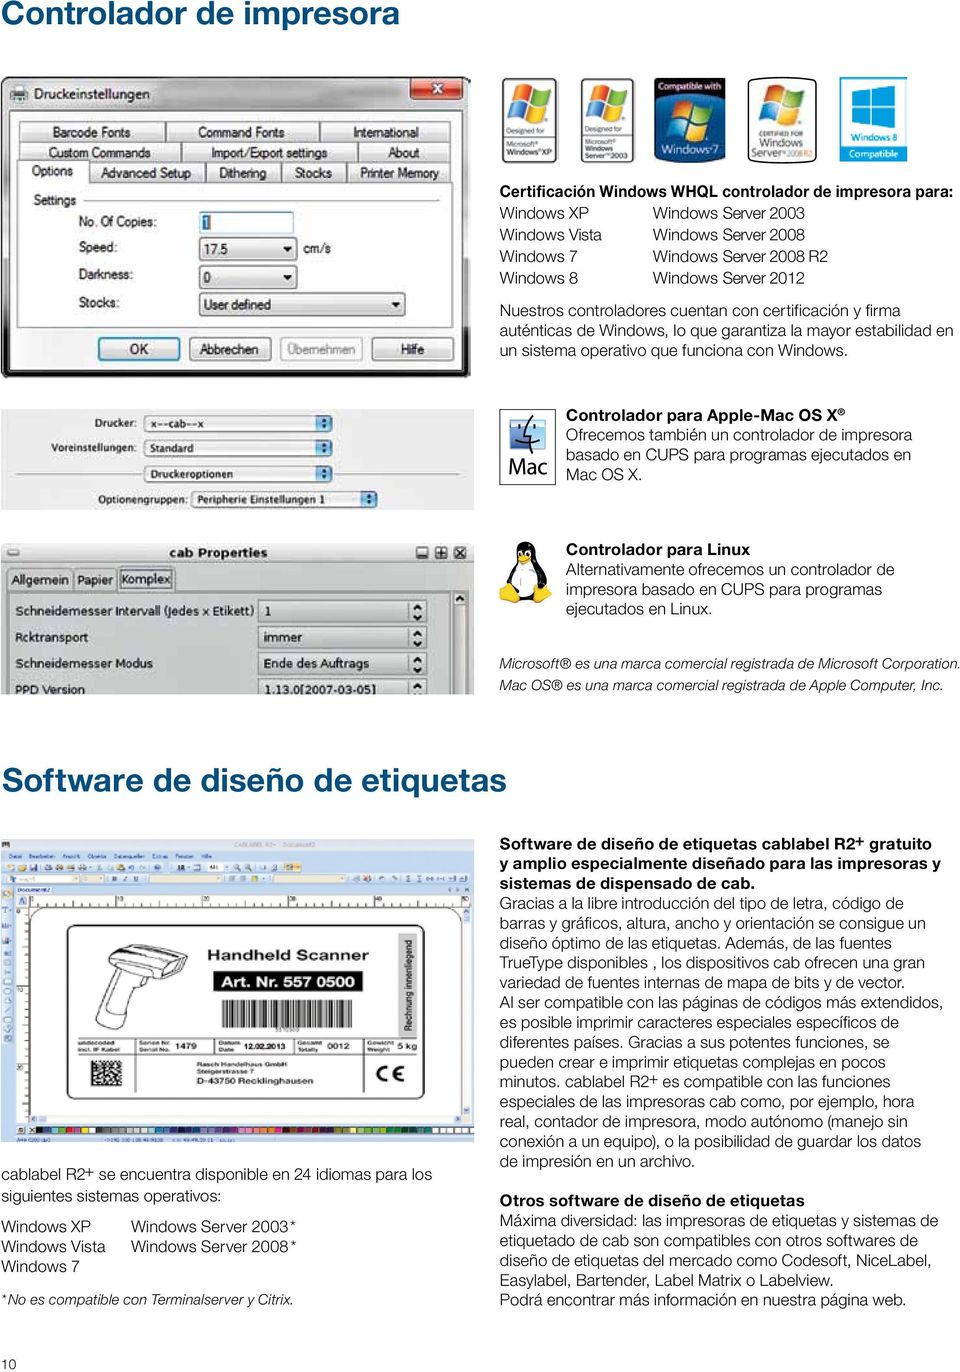 Controlador para Apple-Mac OS X Ofrecemos también un controlador de impresora basado en CUPS para programas ejecutados en Mac OS X.